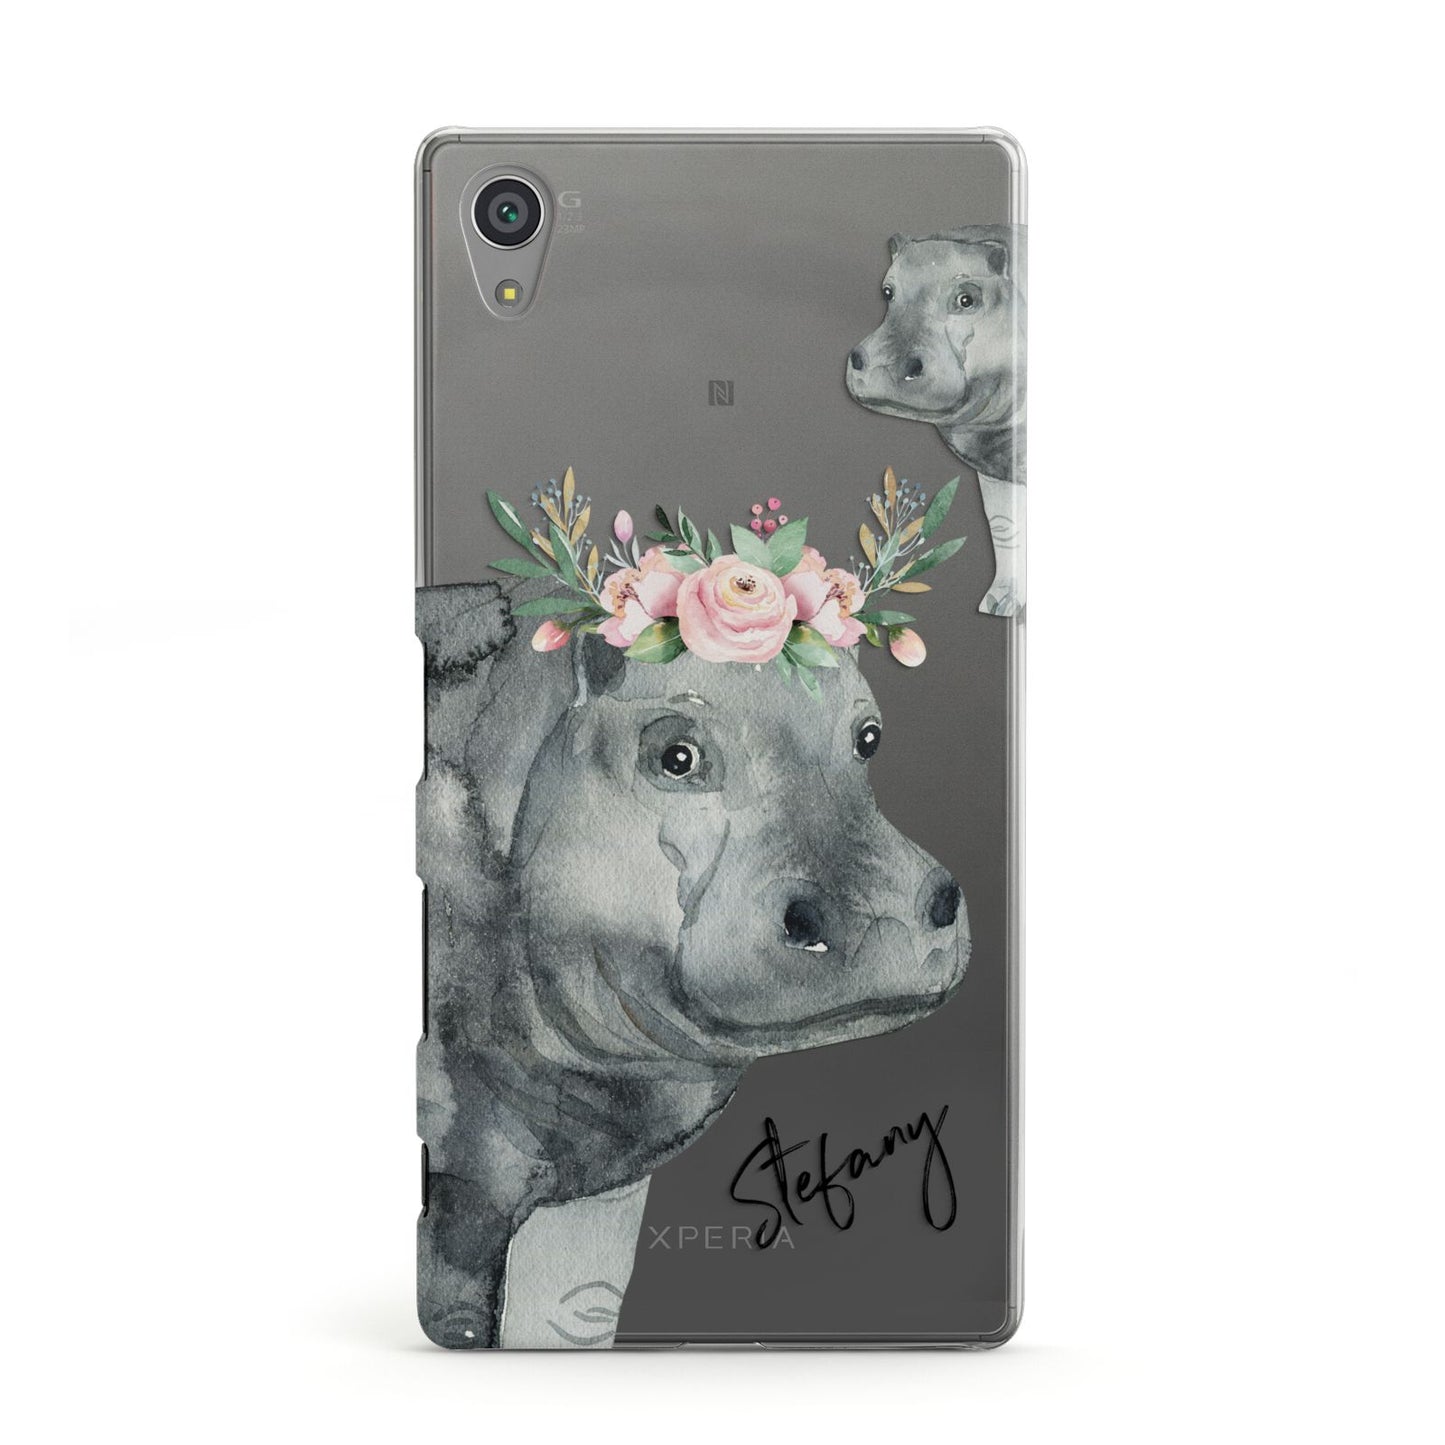 Personalised Hippopotamus Sony Xperia Case